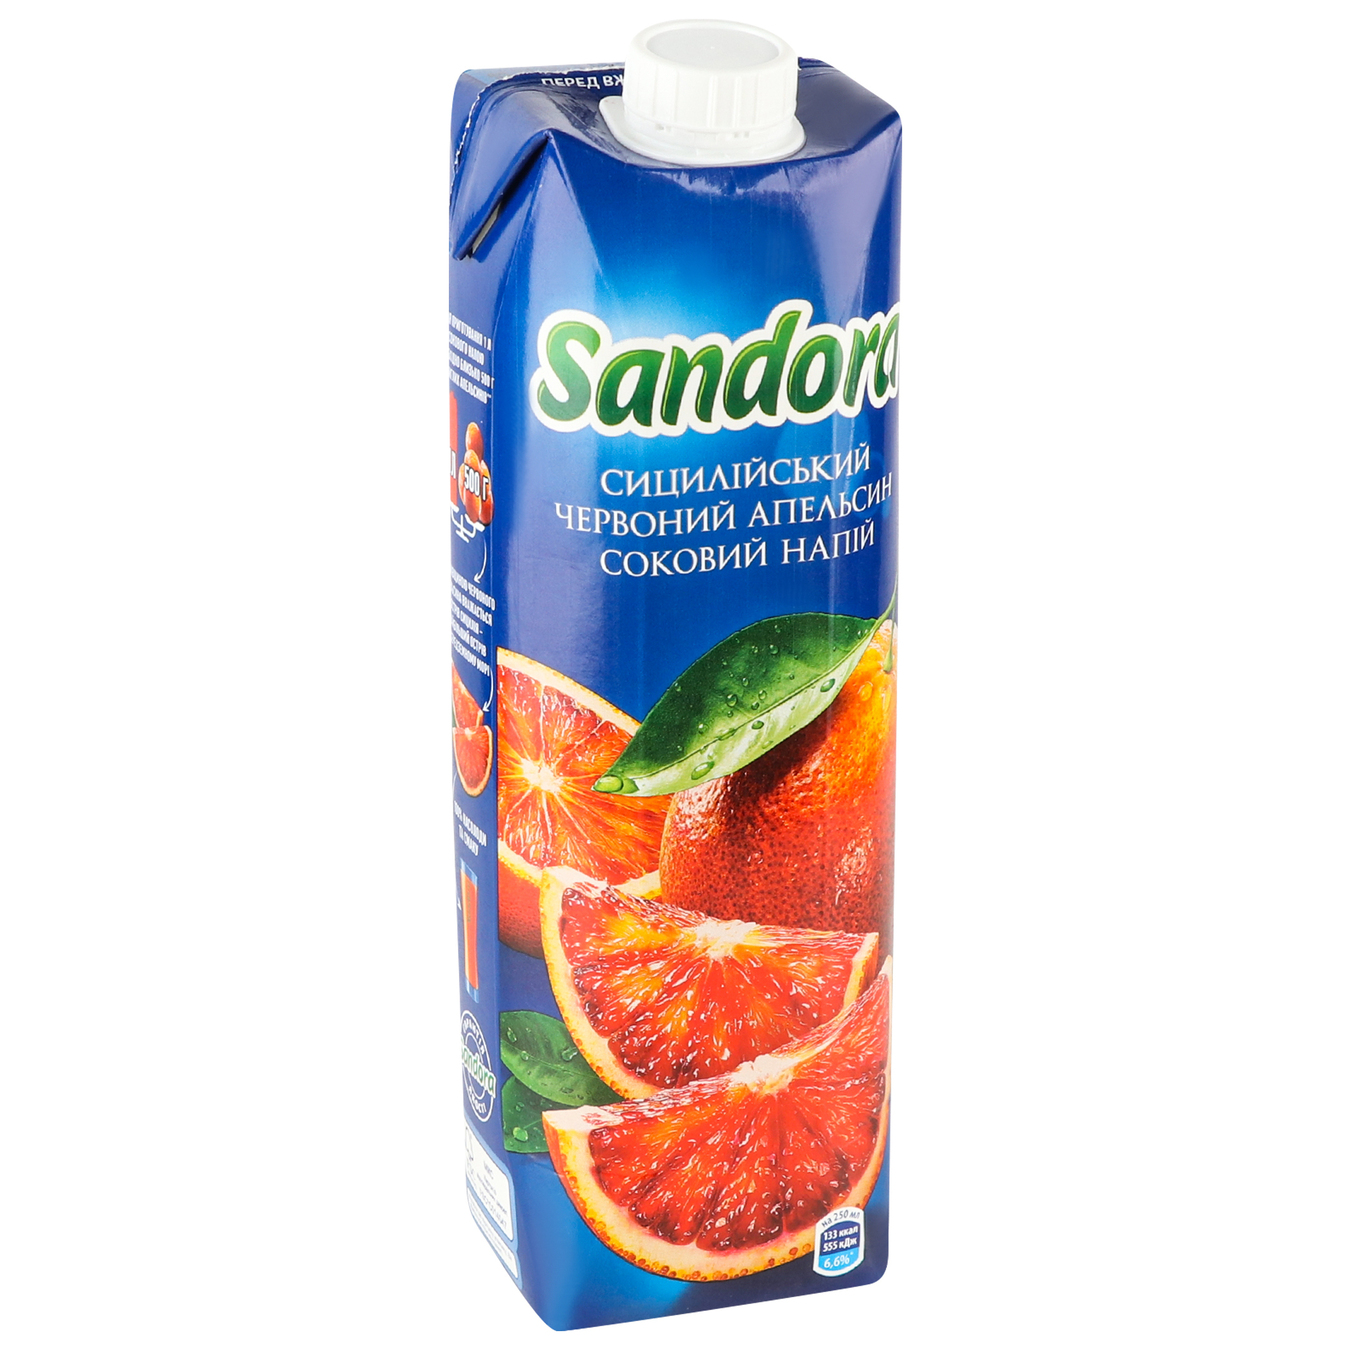 Sandora Sicilian Red Orange Juice Drink 950ml 3